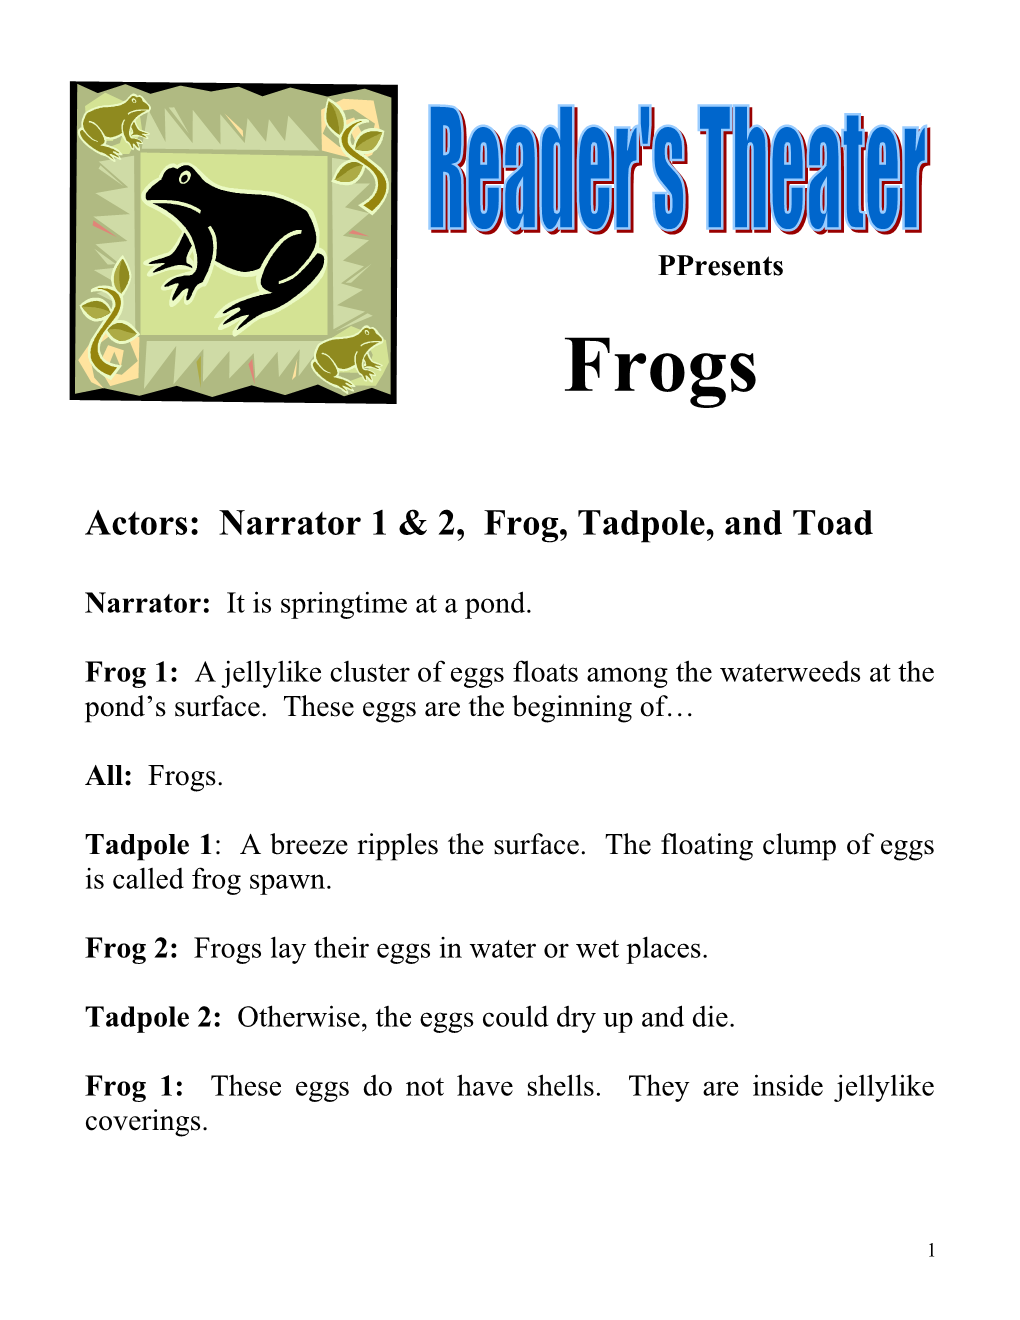 Actors: Narrator 1 & 2, Frog, Tadpole, and Toad